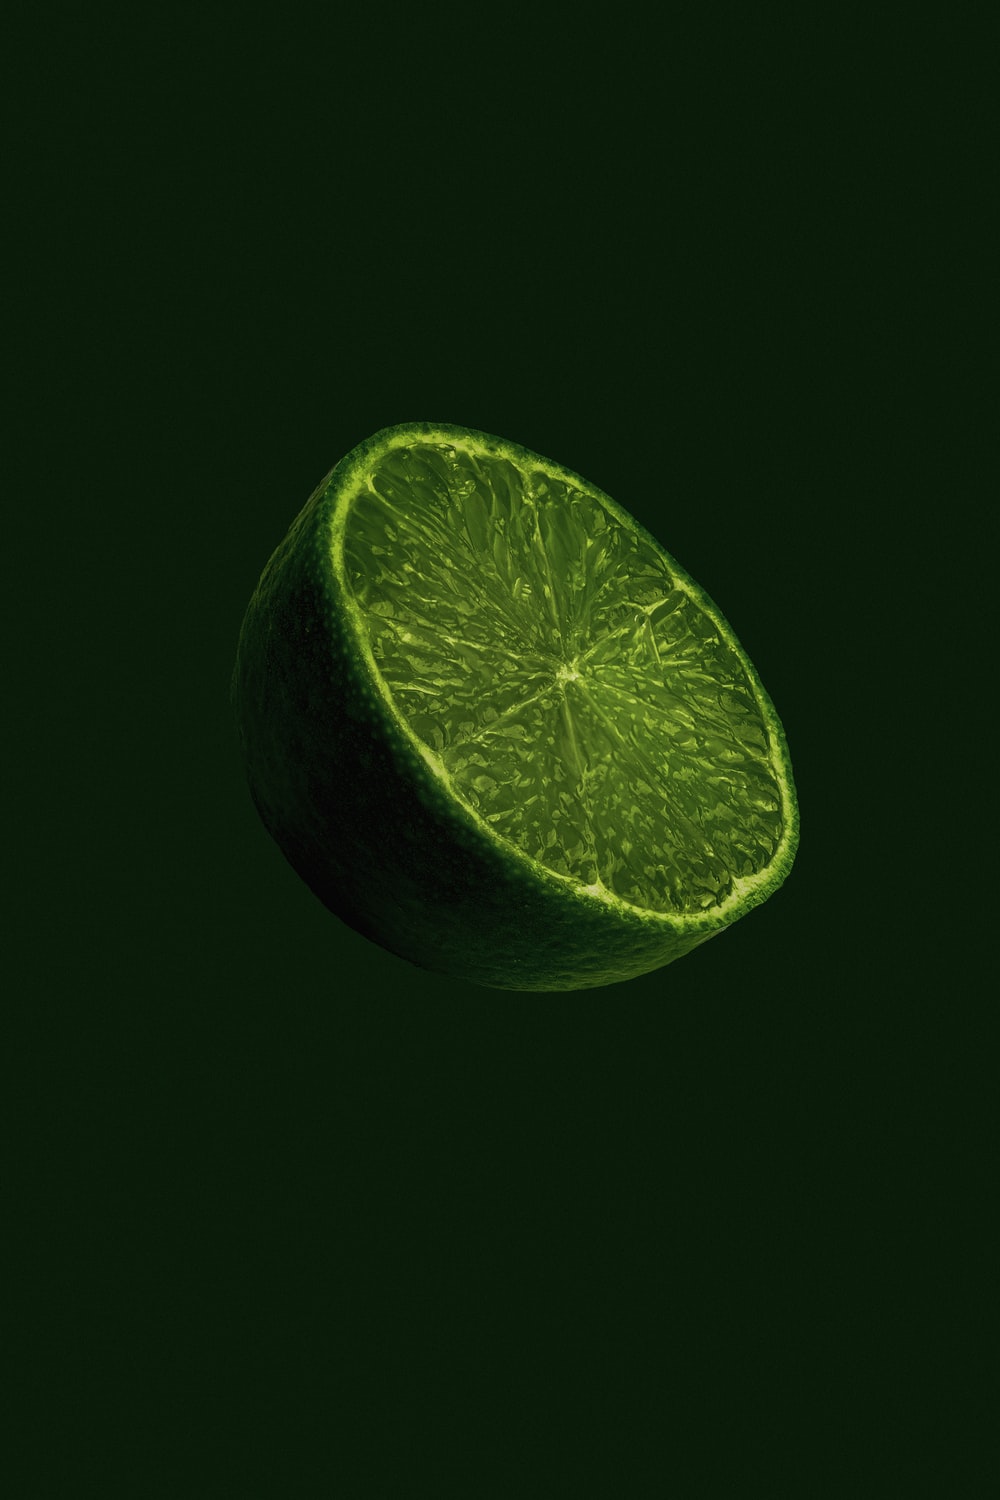 Green Lemon Picture. Download Free Image